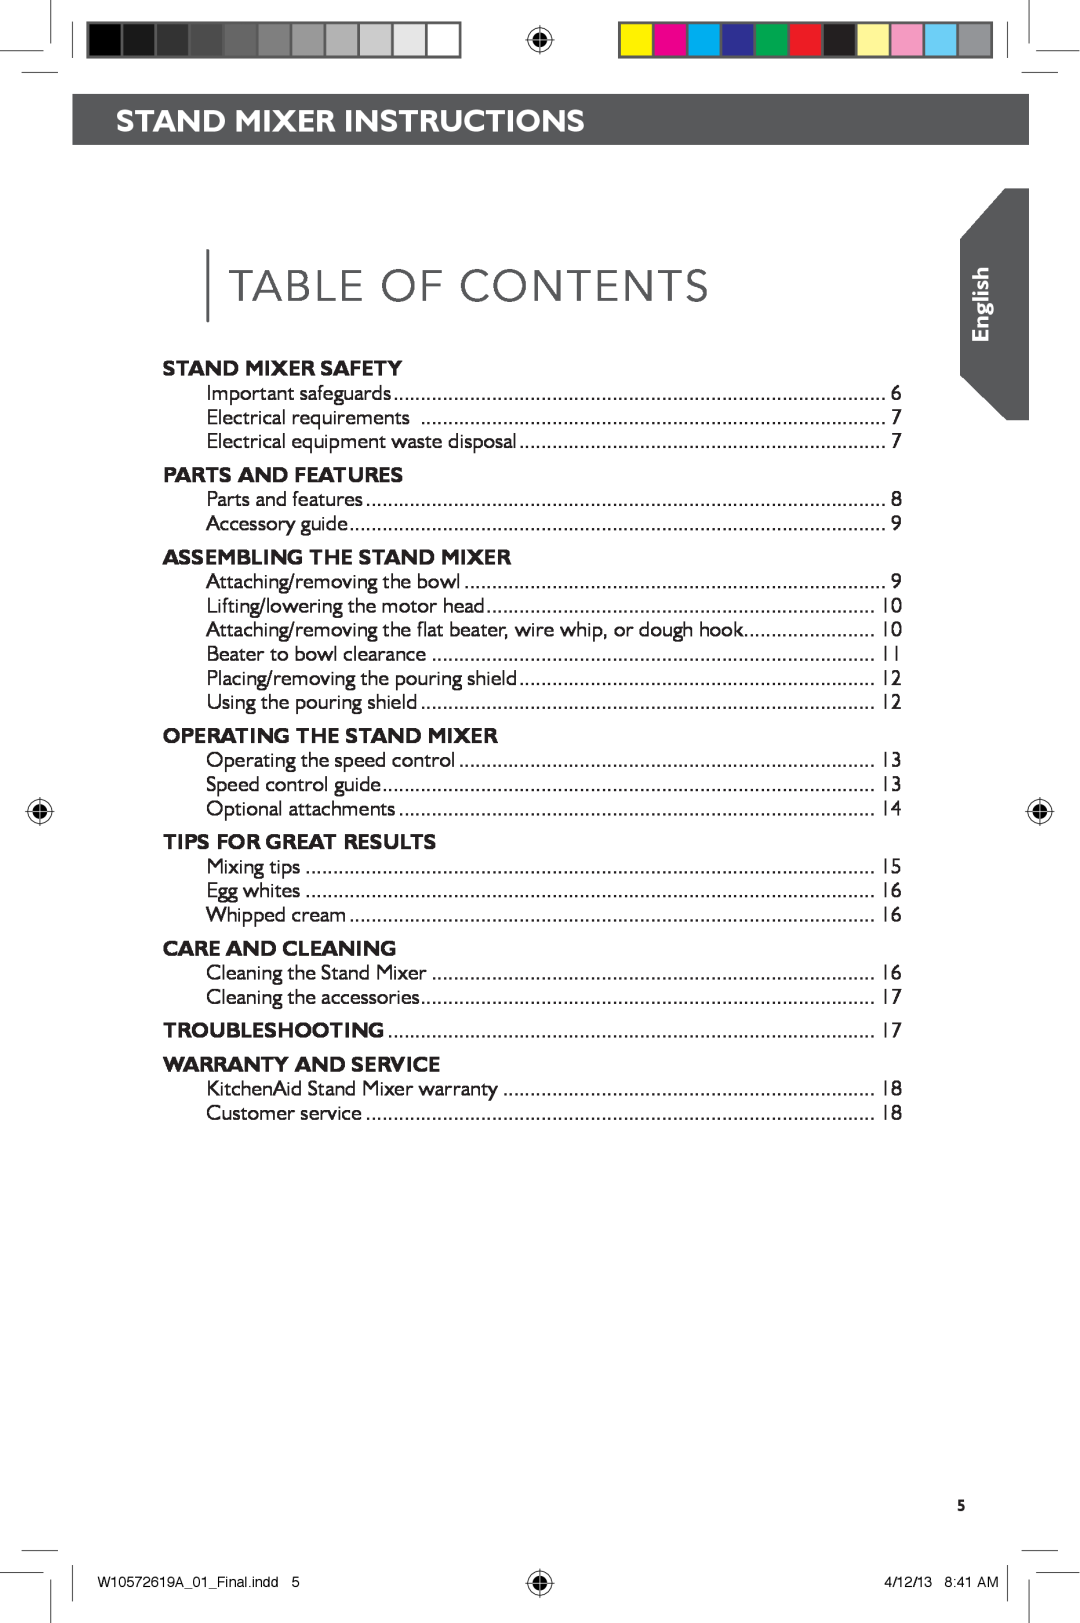 KitchenAid 5KSM156, 5KSM45 manual Stand mixer INSTRUCTIONS, Table of Contents, English, Mixing tips, Troubleshooting 